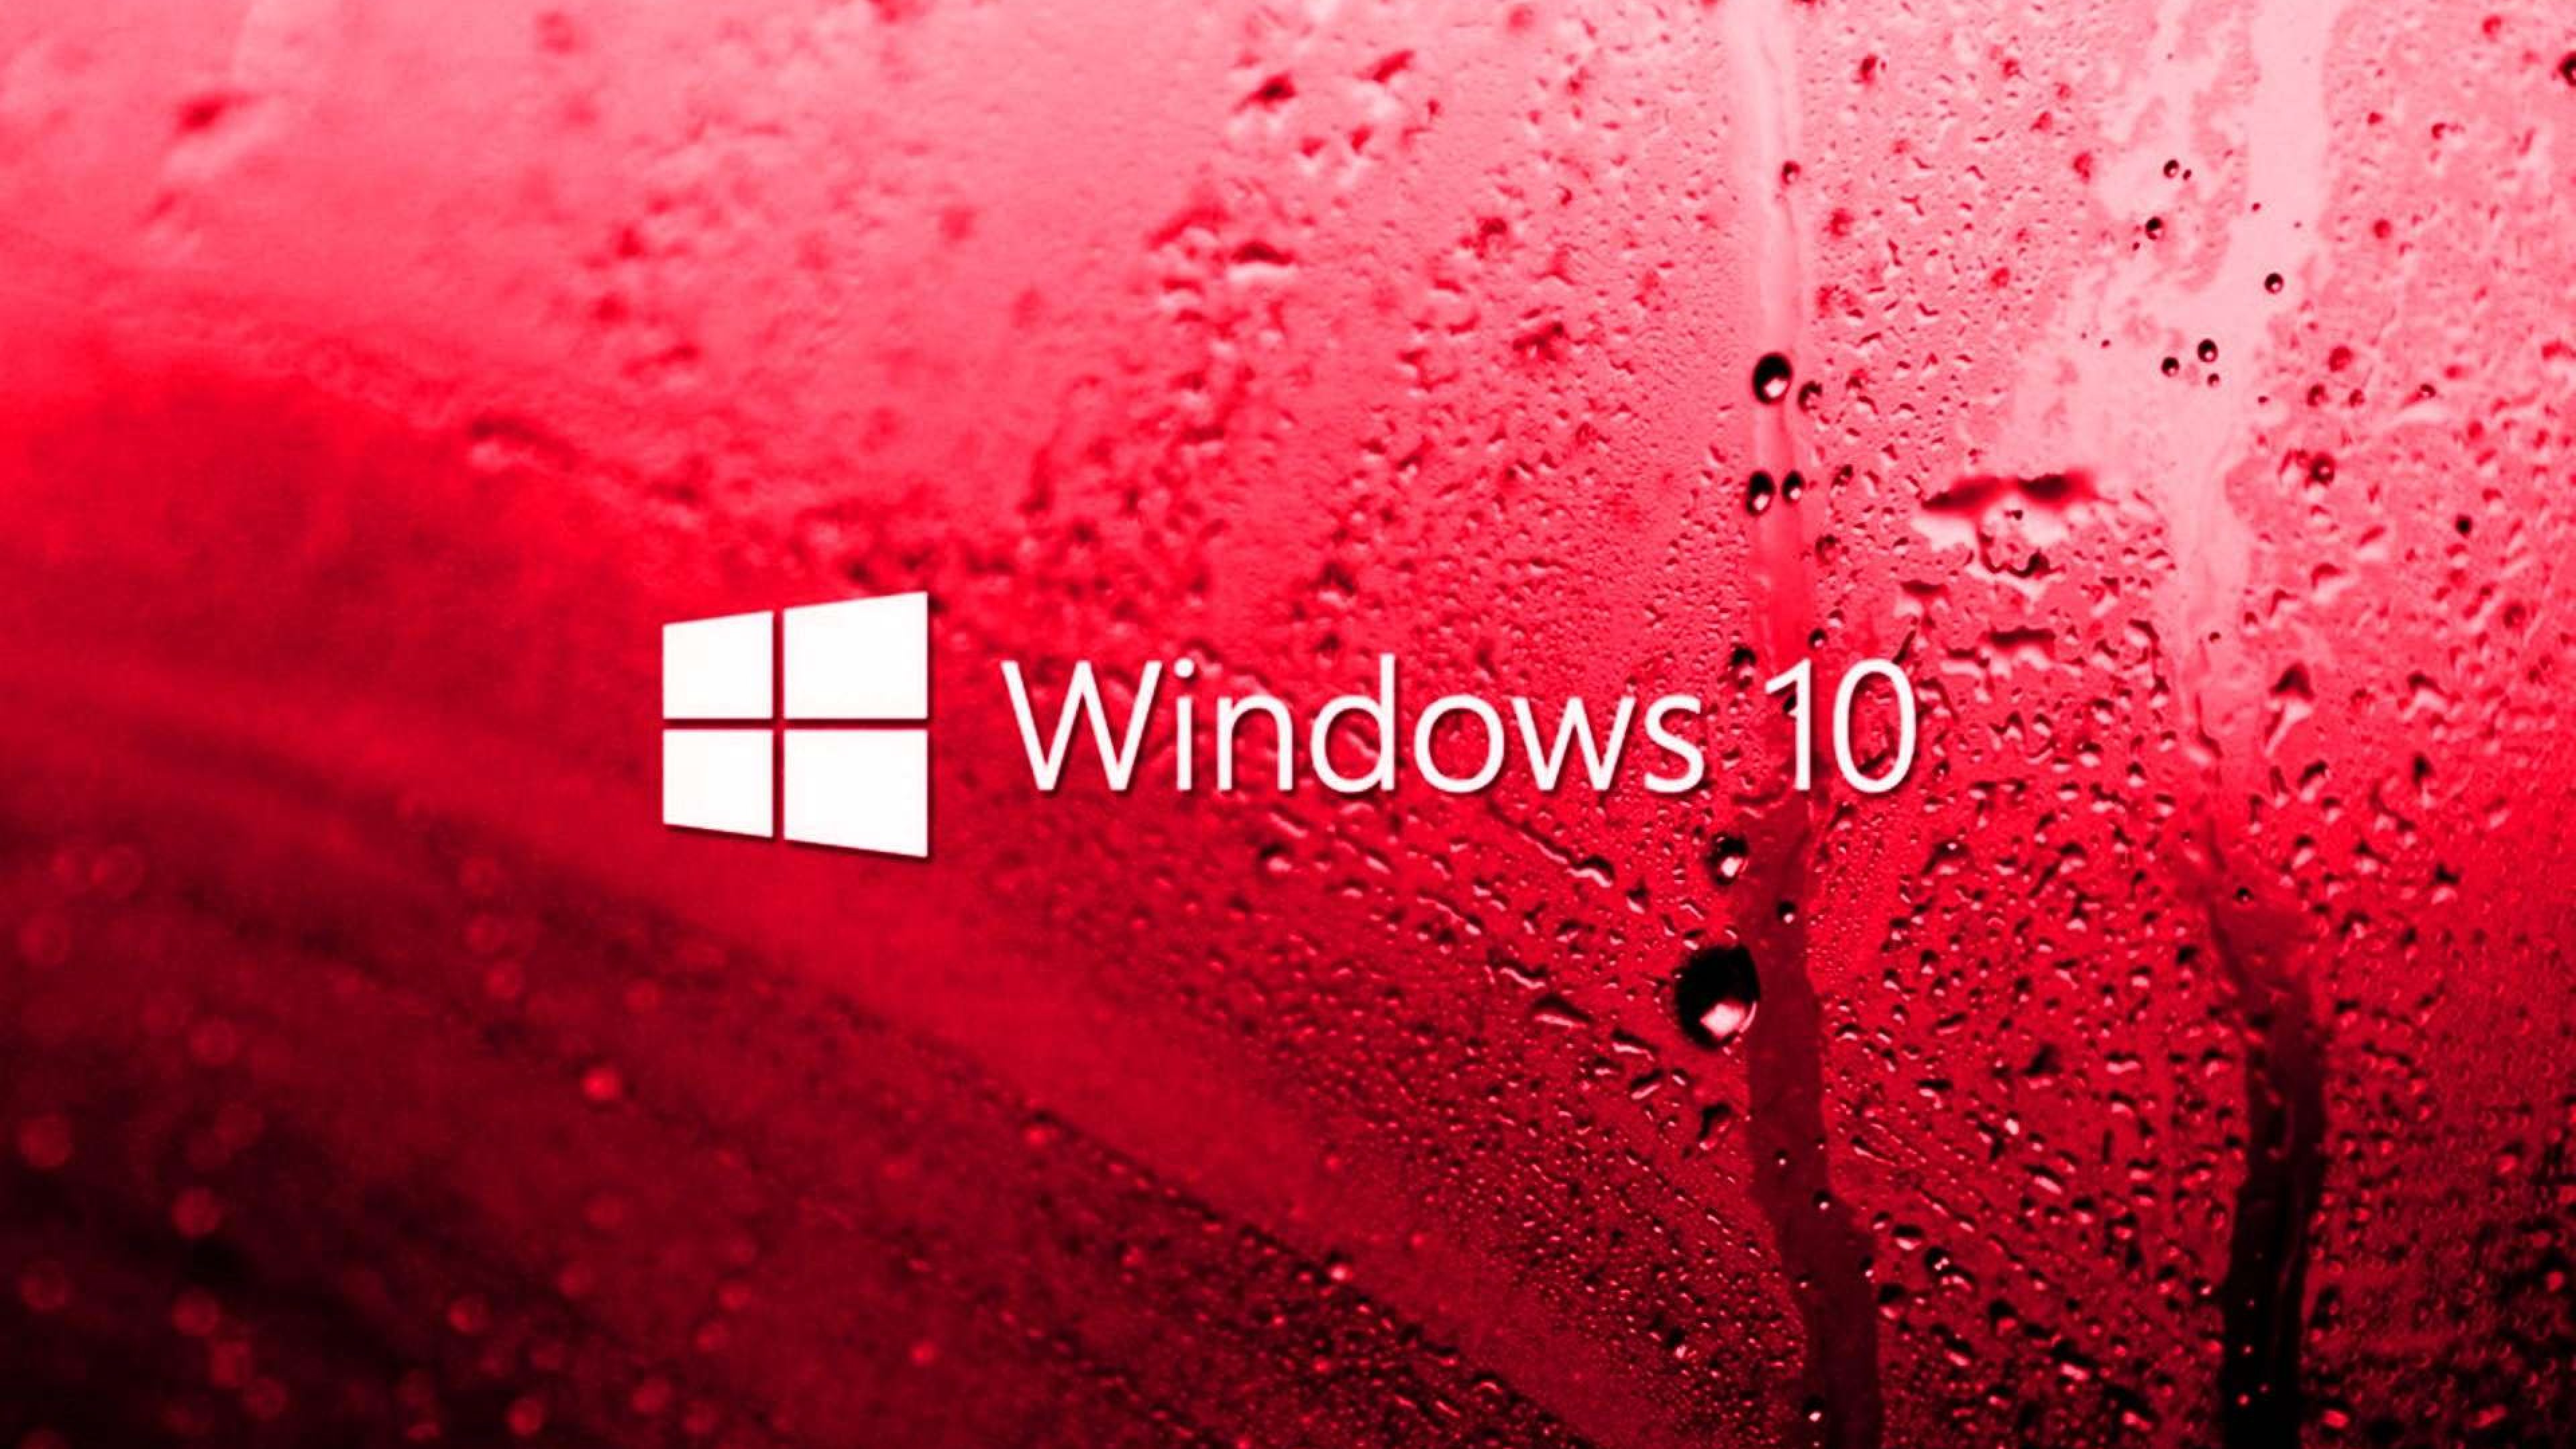 Windows 10 4k Wallpaper Download - HD Wallpaper 